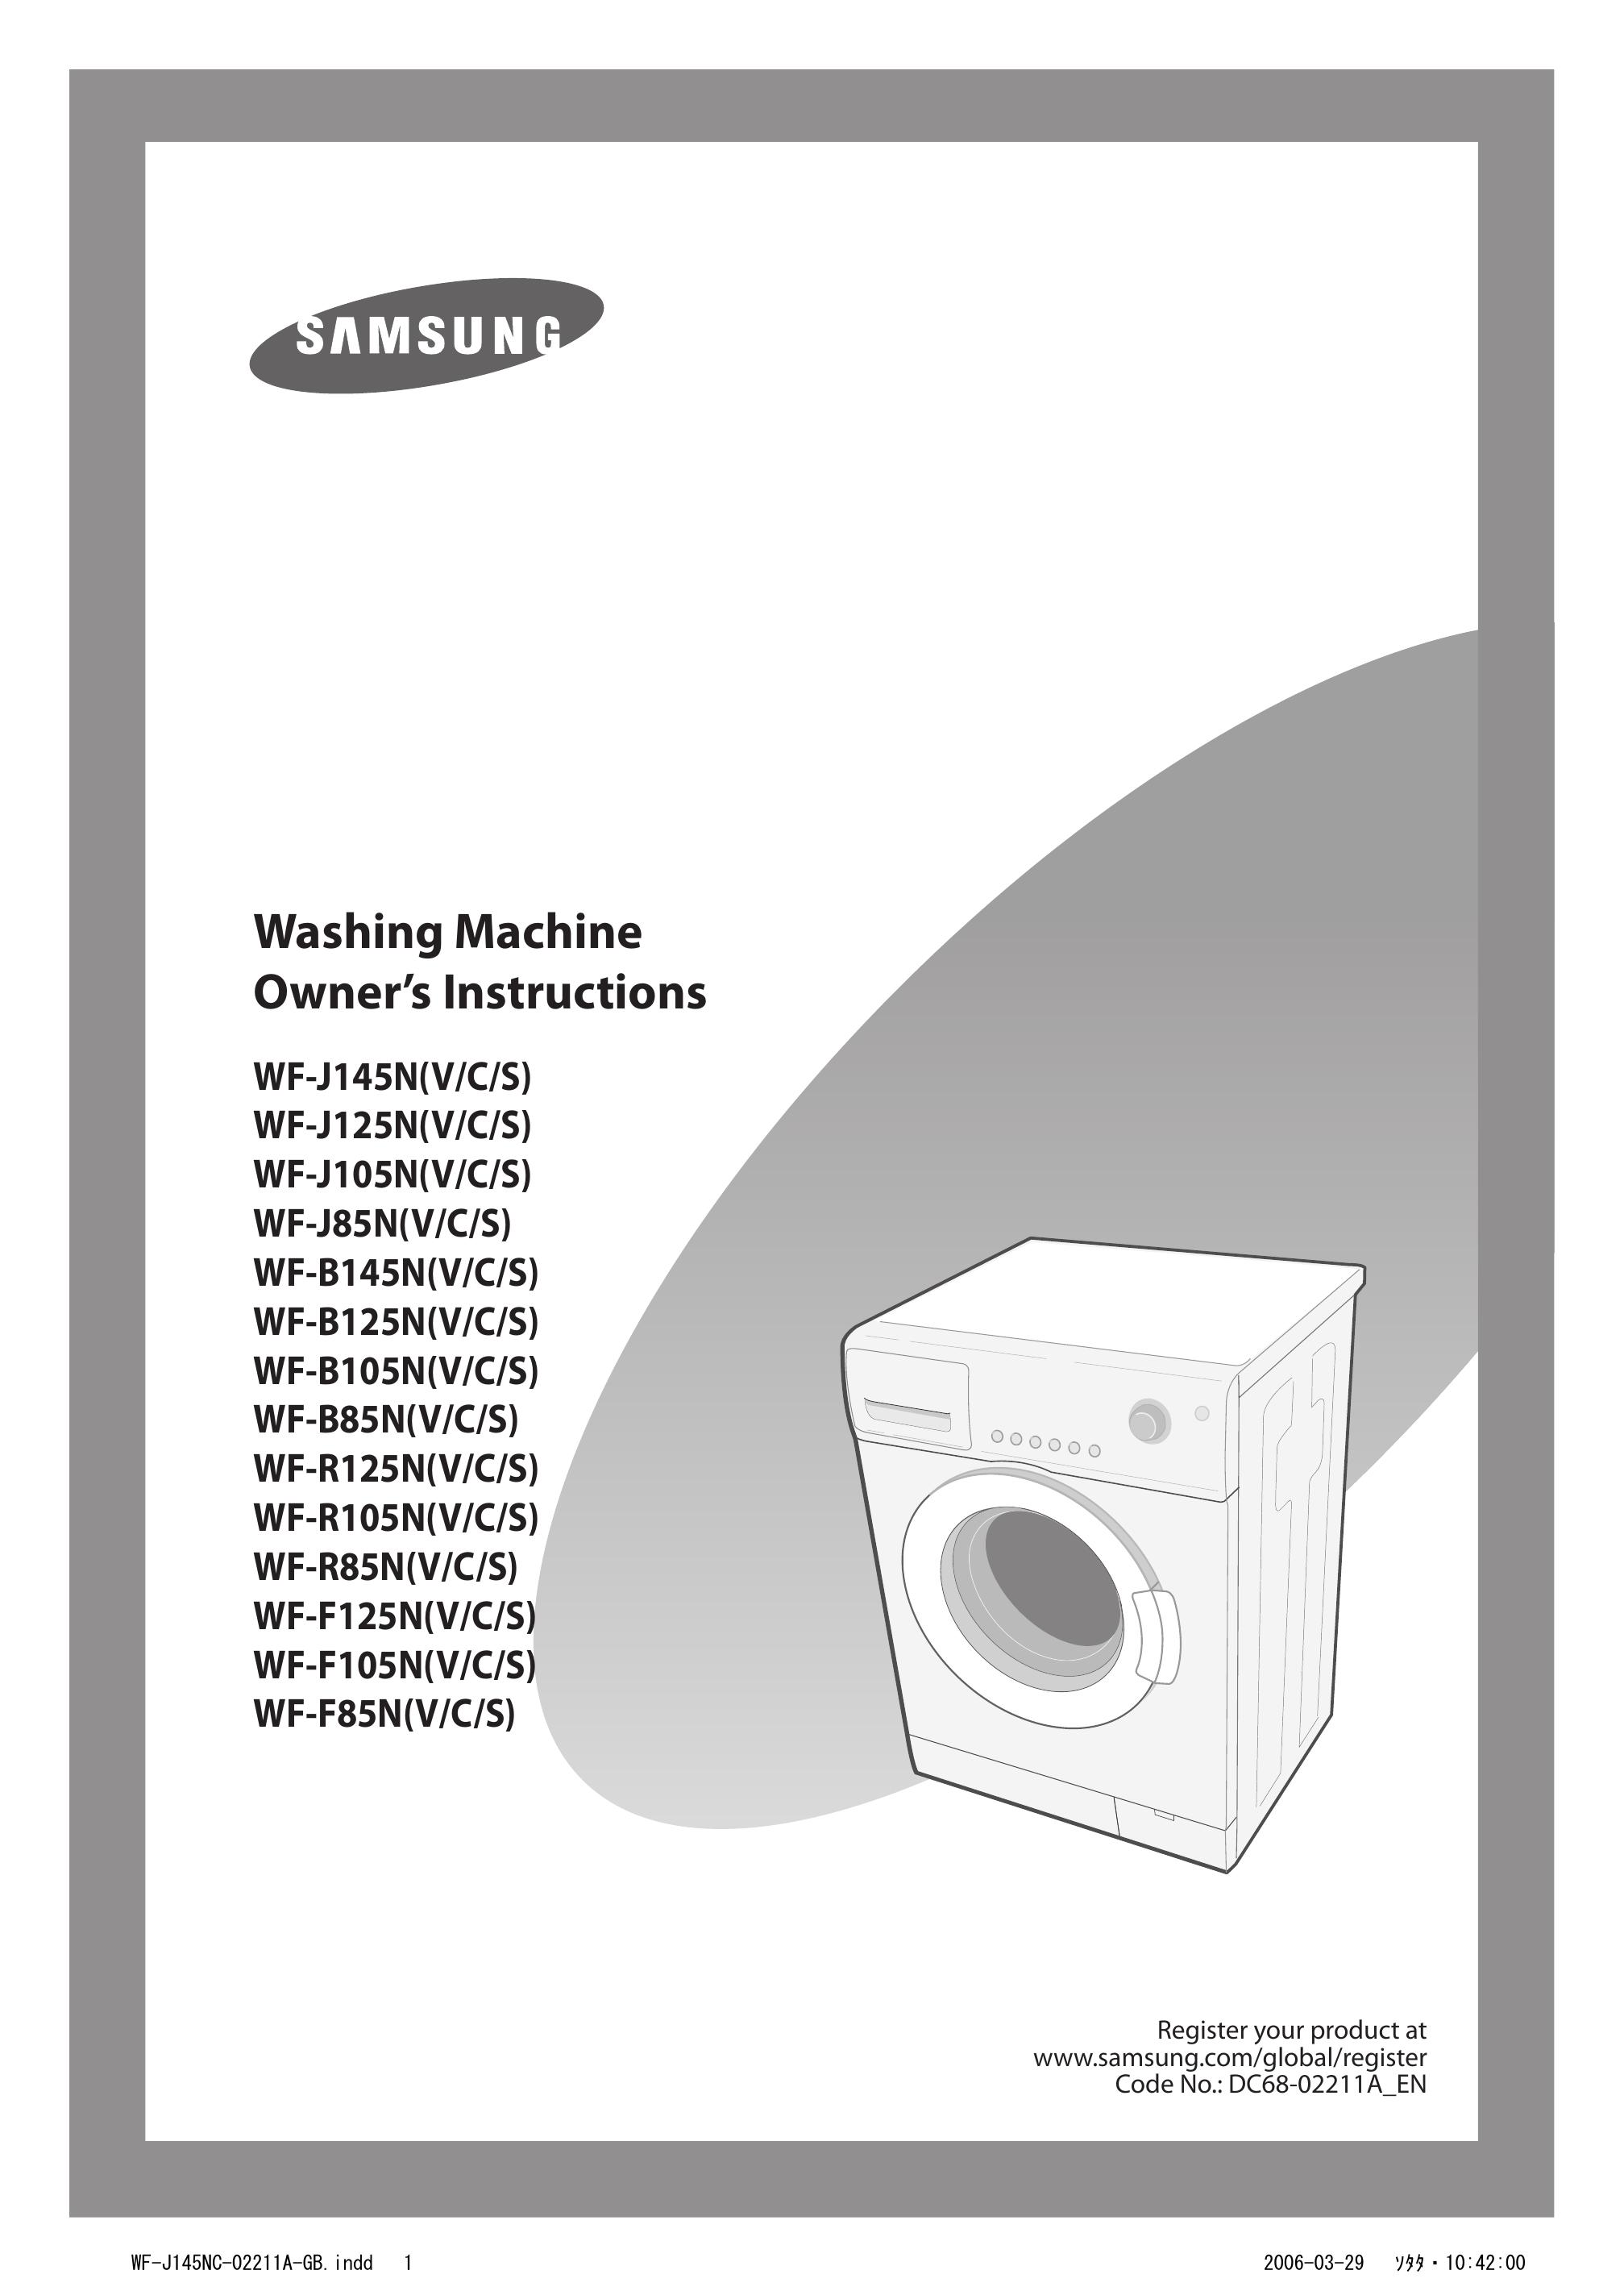 Samsung WF-B145N(V/C/S) Washer/Dryer User Manual